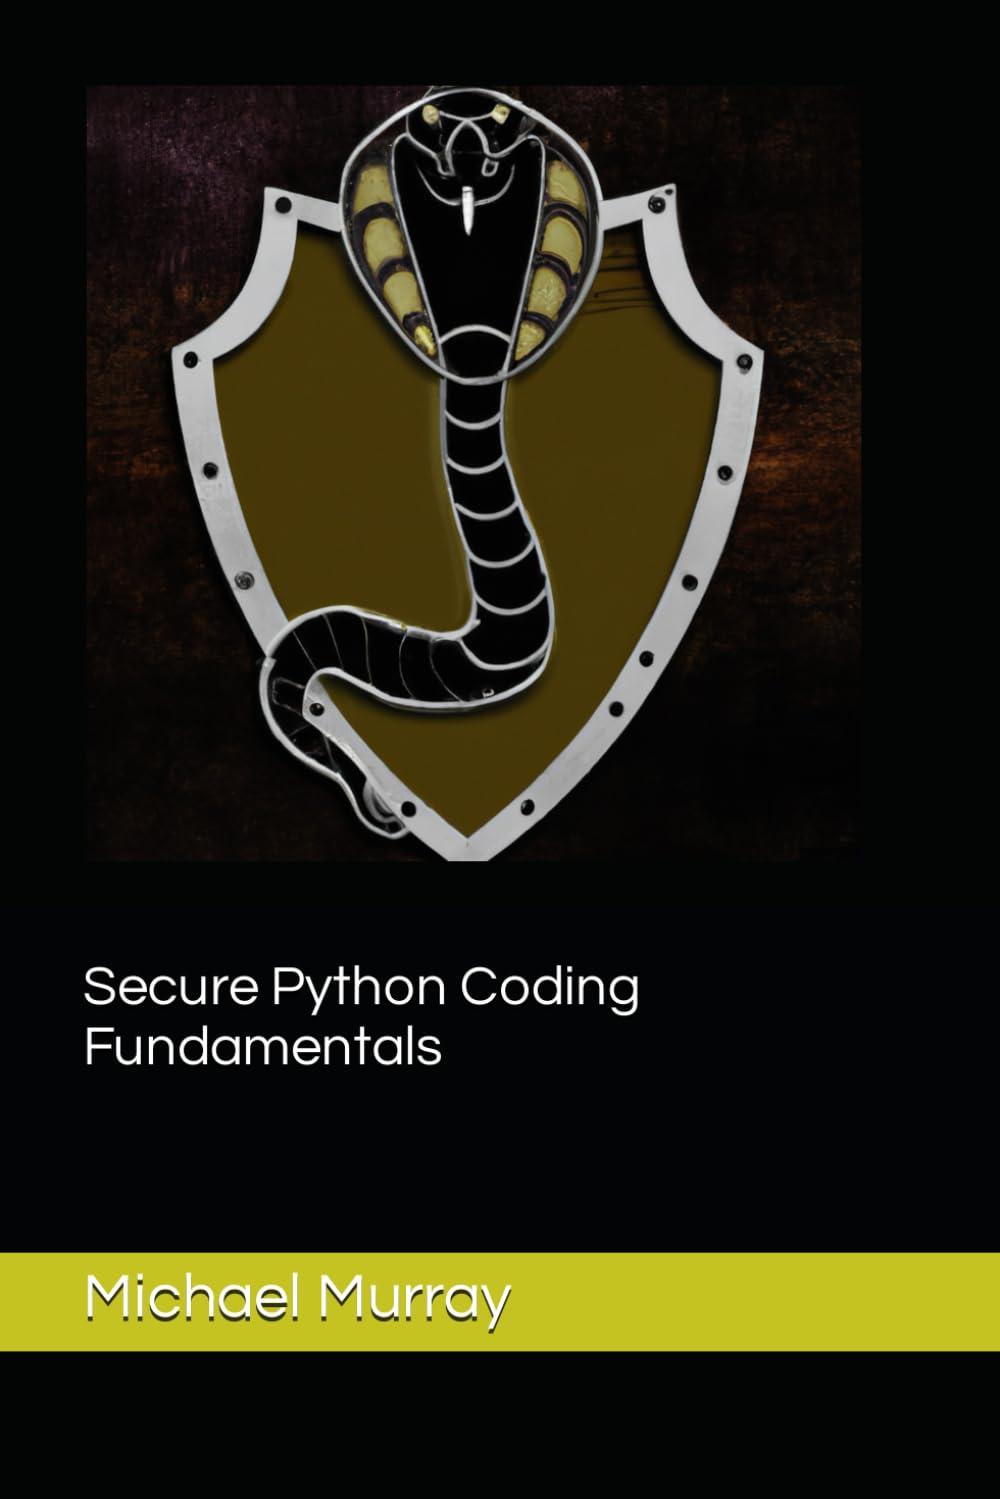 secure python coding fundamentals 1st edition michael murray b0ck9xbcgz, 979-8862926309